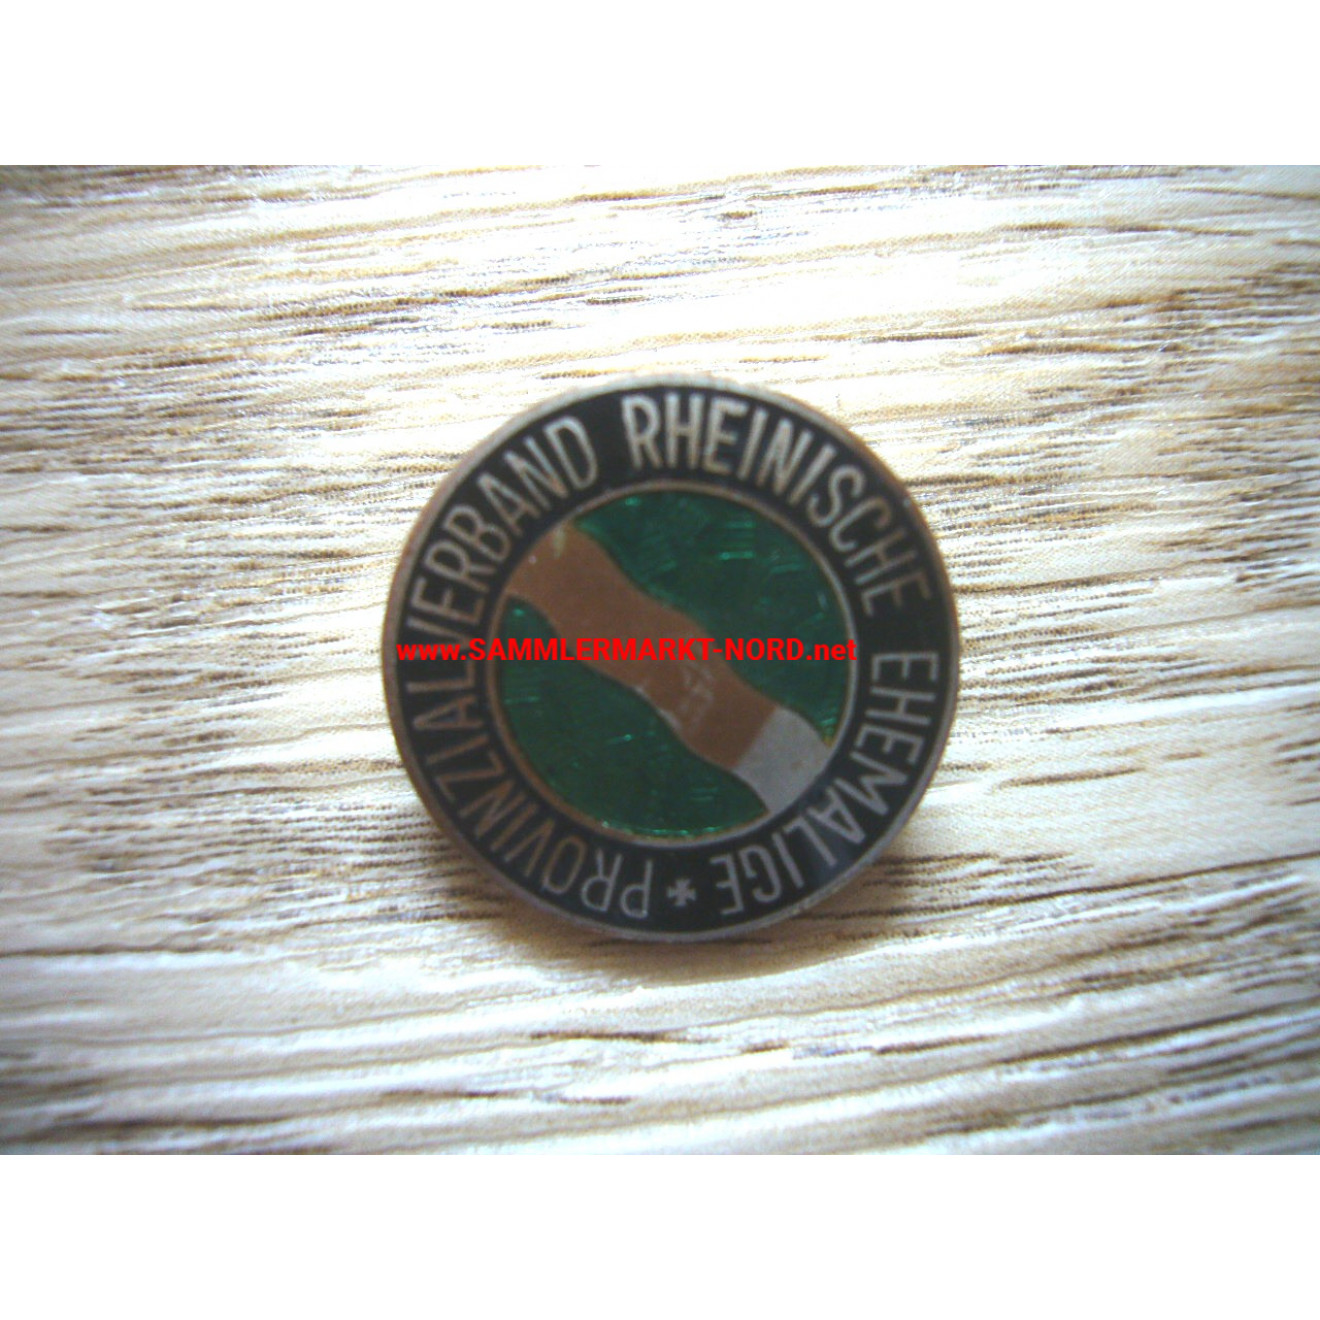 Provincial Association of Rhenish Past Members - Membership Badge